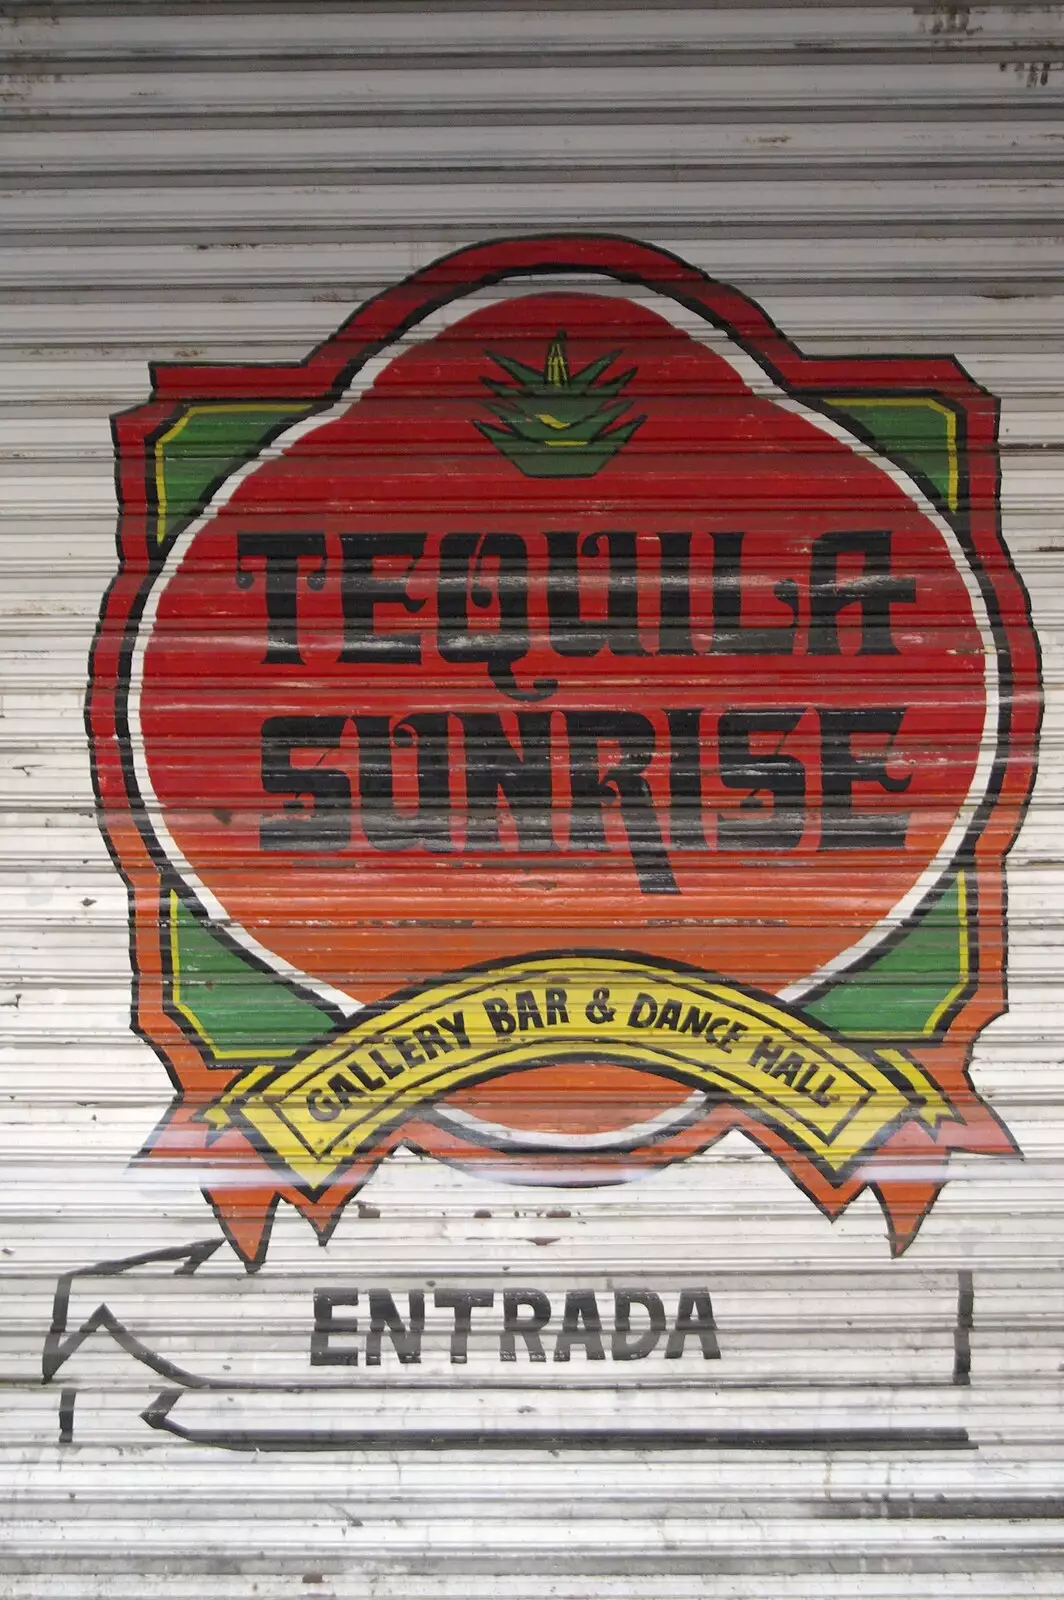 Tequila Sunrise, from Rosarito and Tijuana, Baja California, Mexico - 2nd March 2008